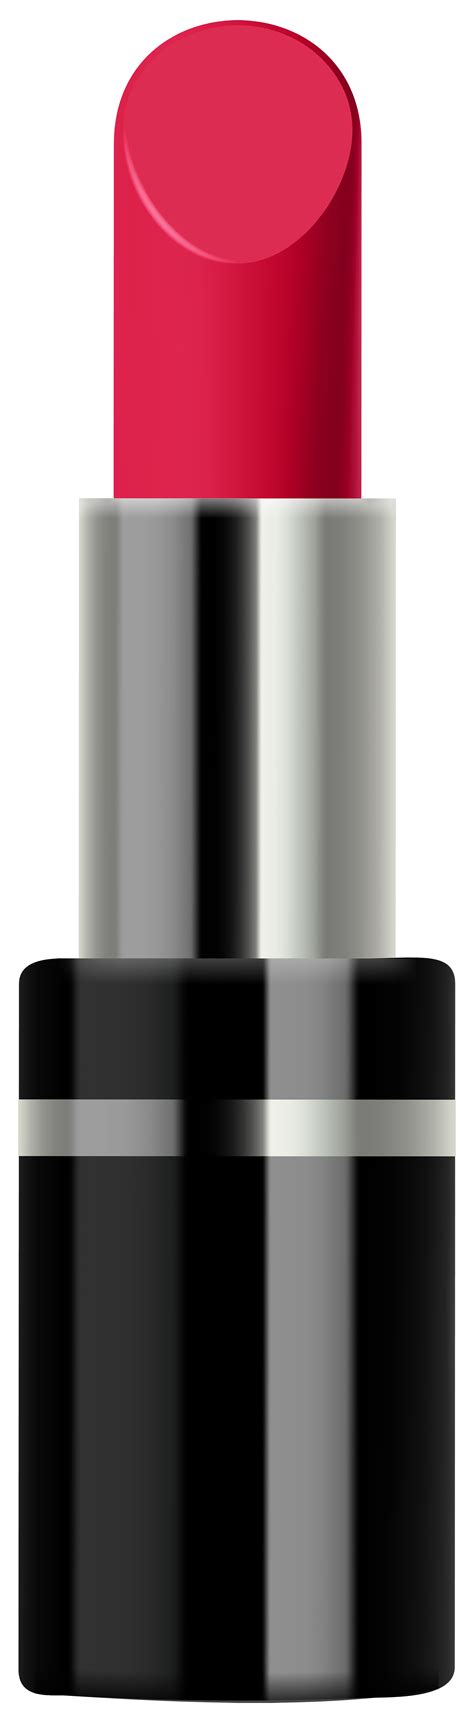 Lipstick Cosmetics Clip Art Red Lipstick Png Transparent Clip Art